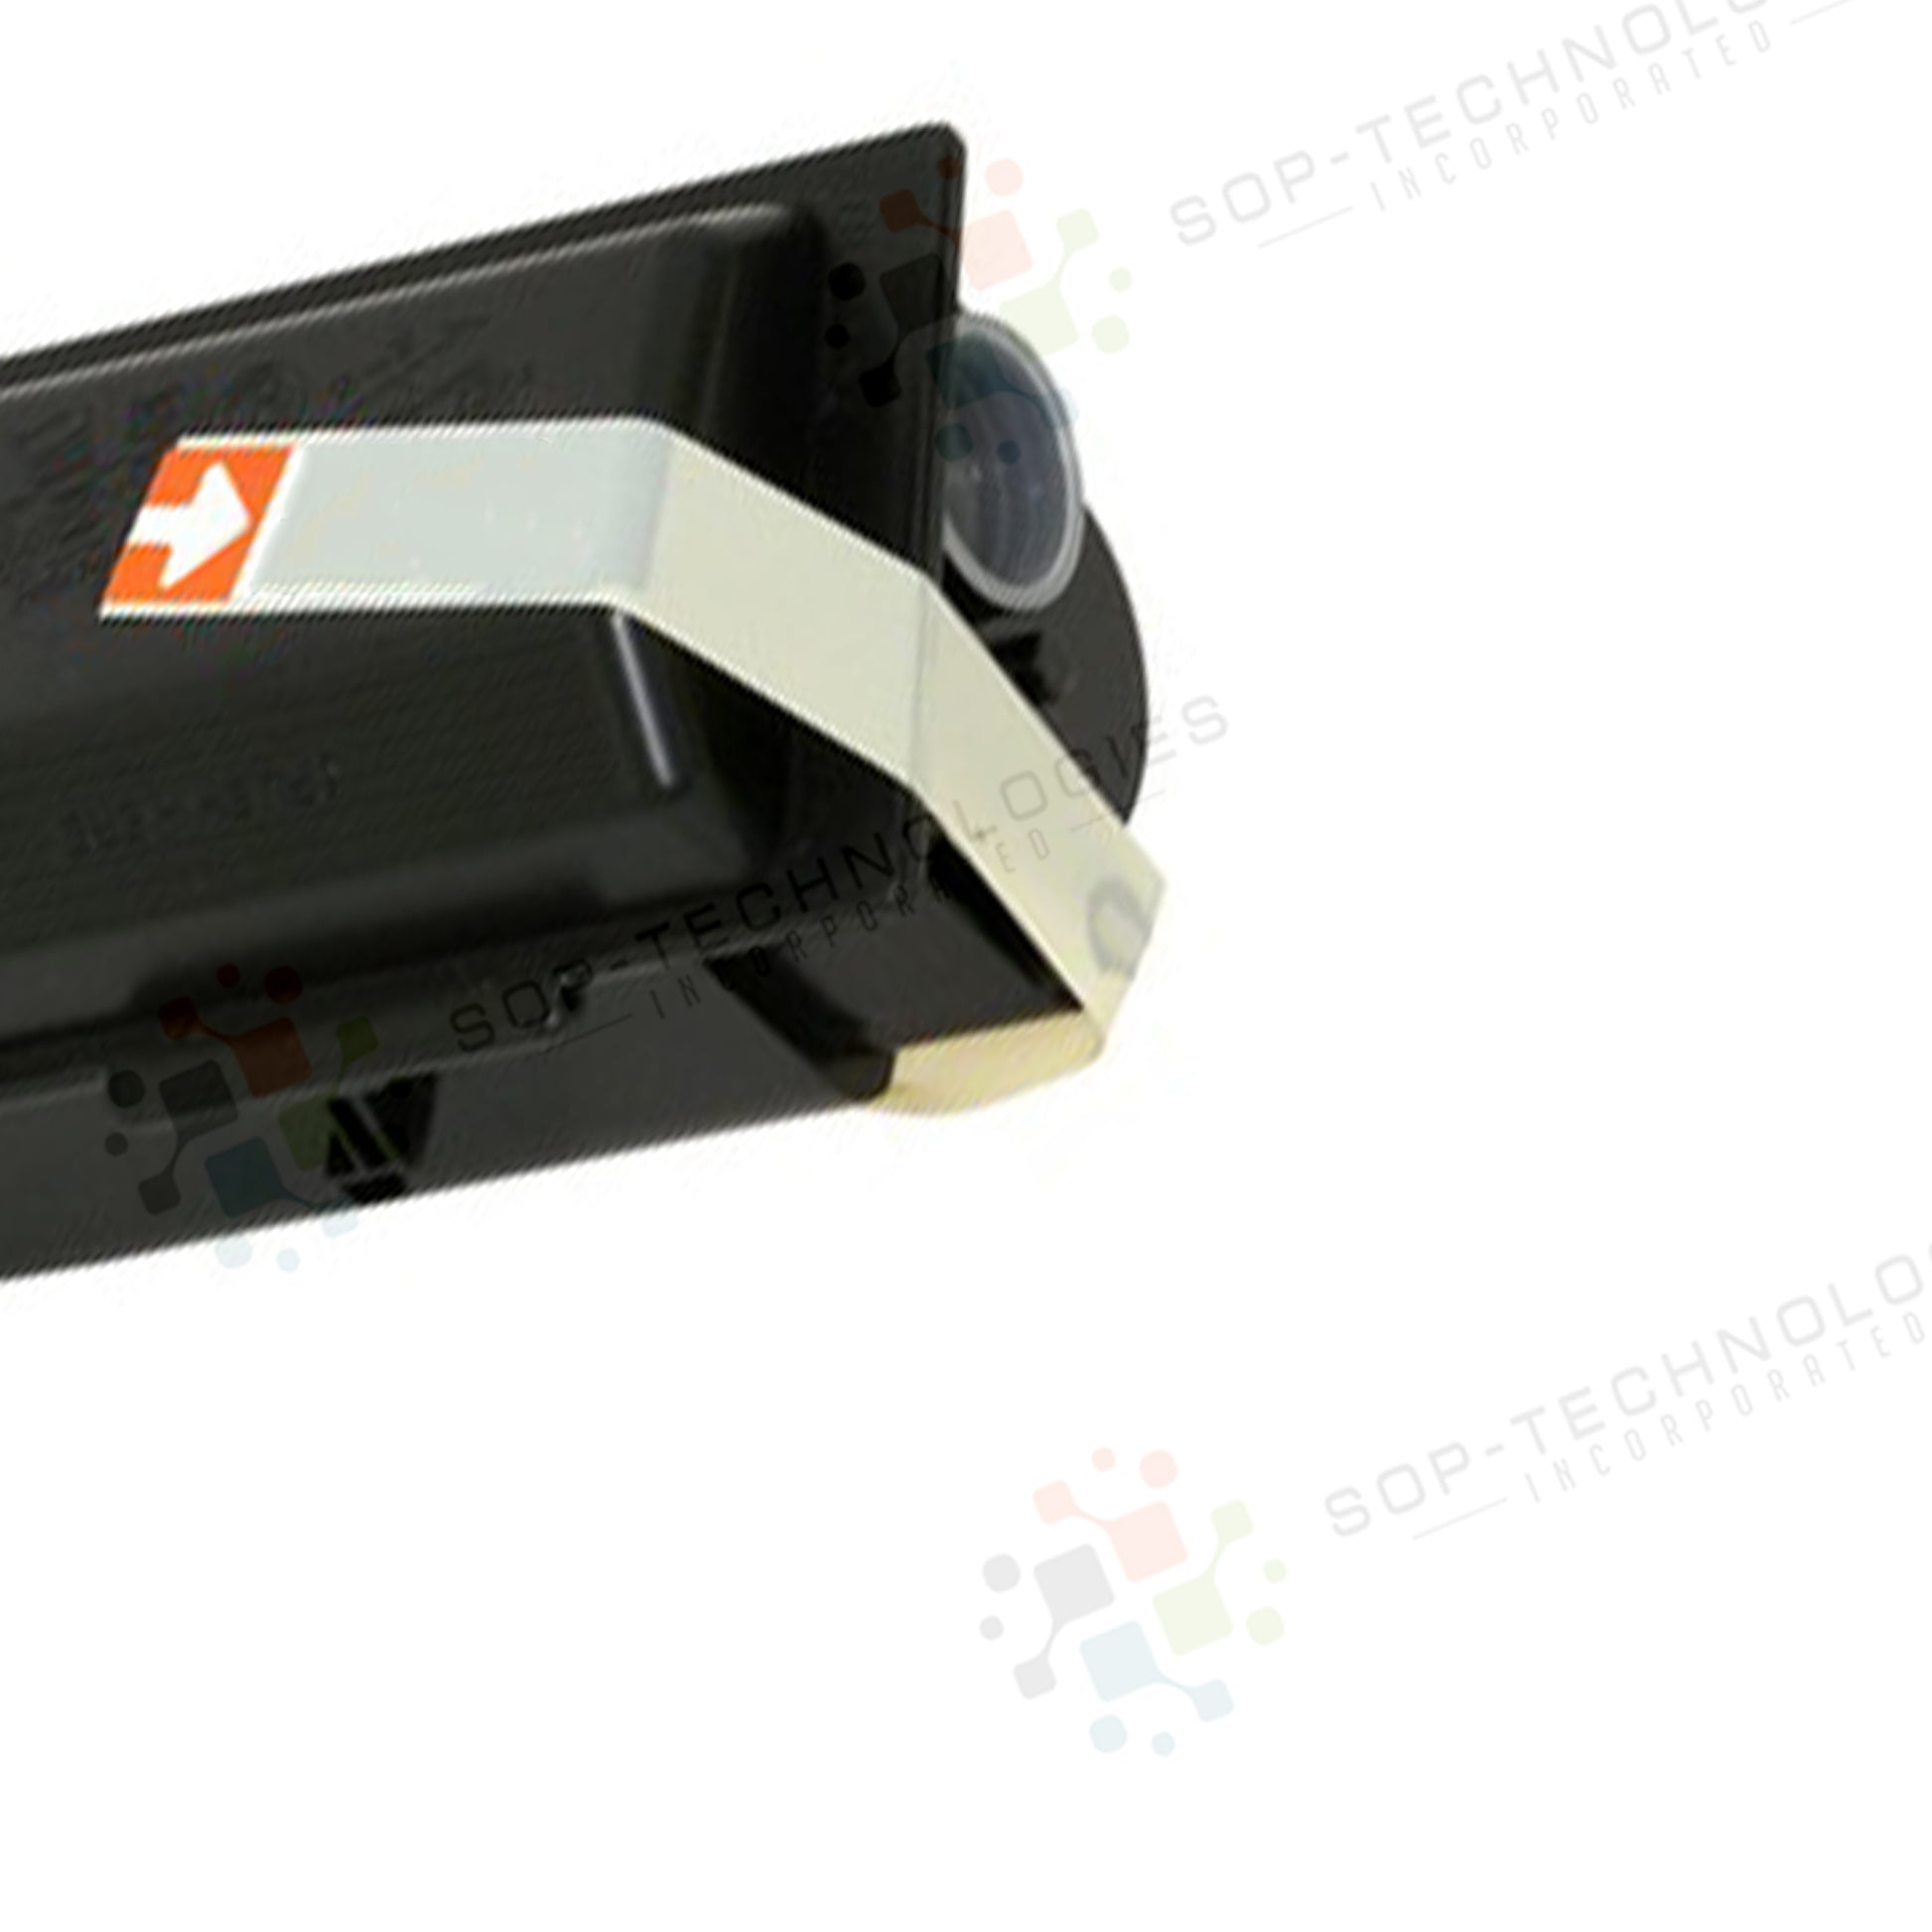 3 Pack Toner for Kyocera FS-720 - SOP-TECHNOLOGIES, INC.